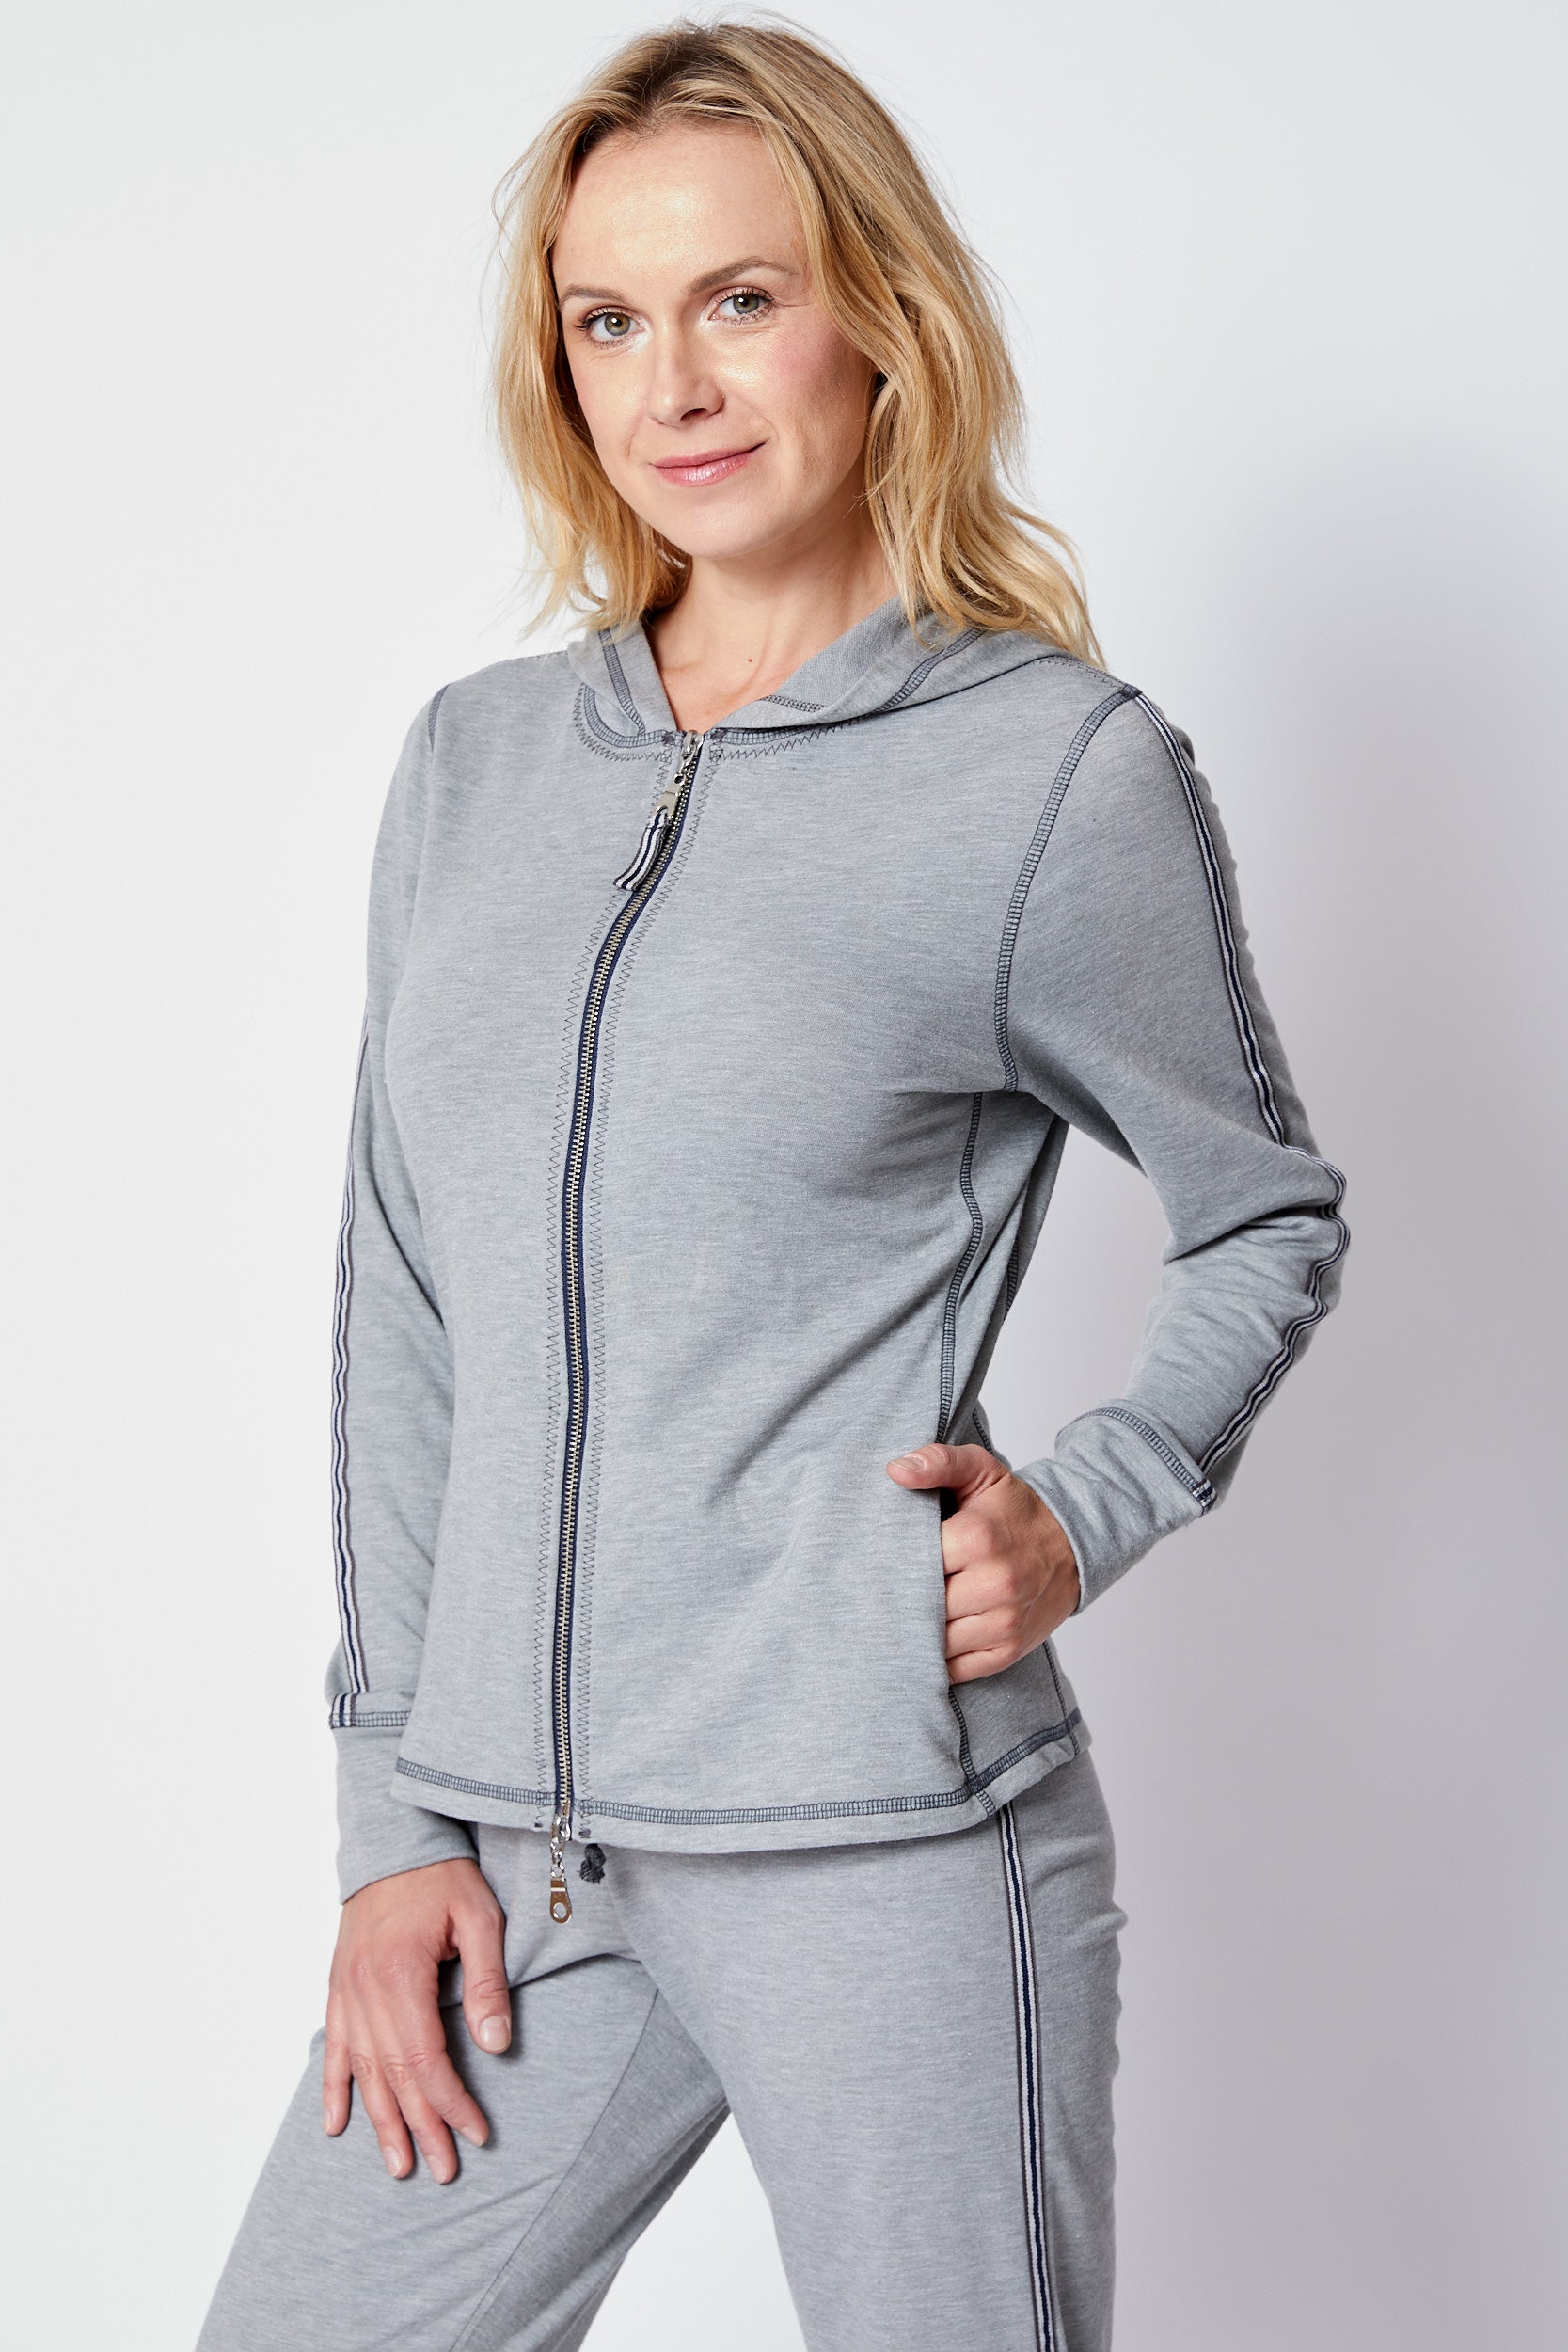 Gray Racer Stripe Sweats - Jacqueline B Clothing